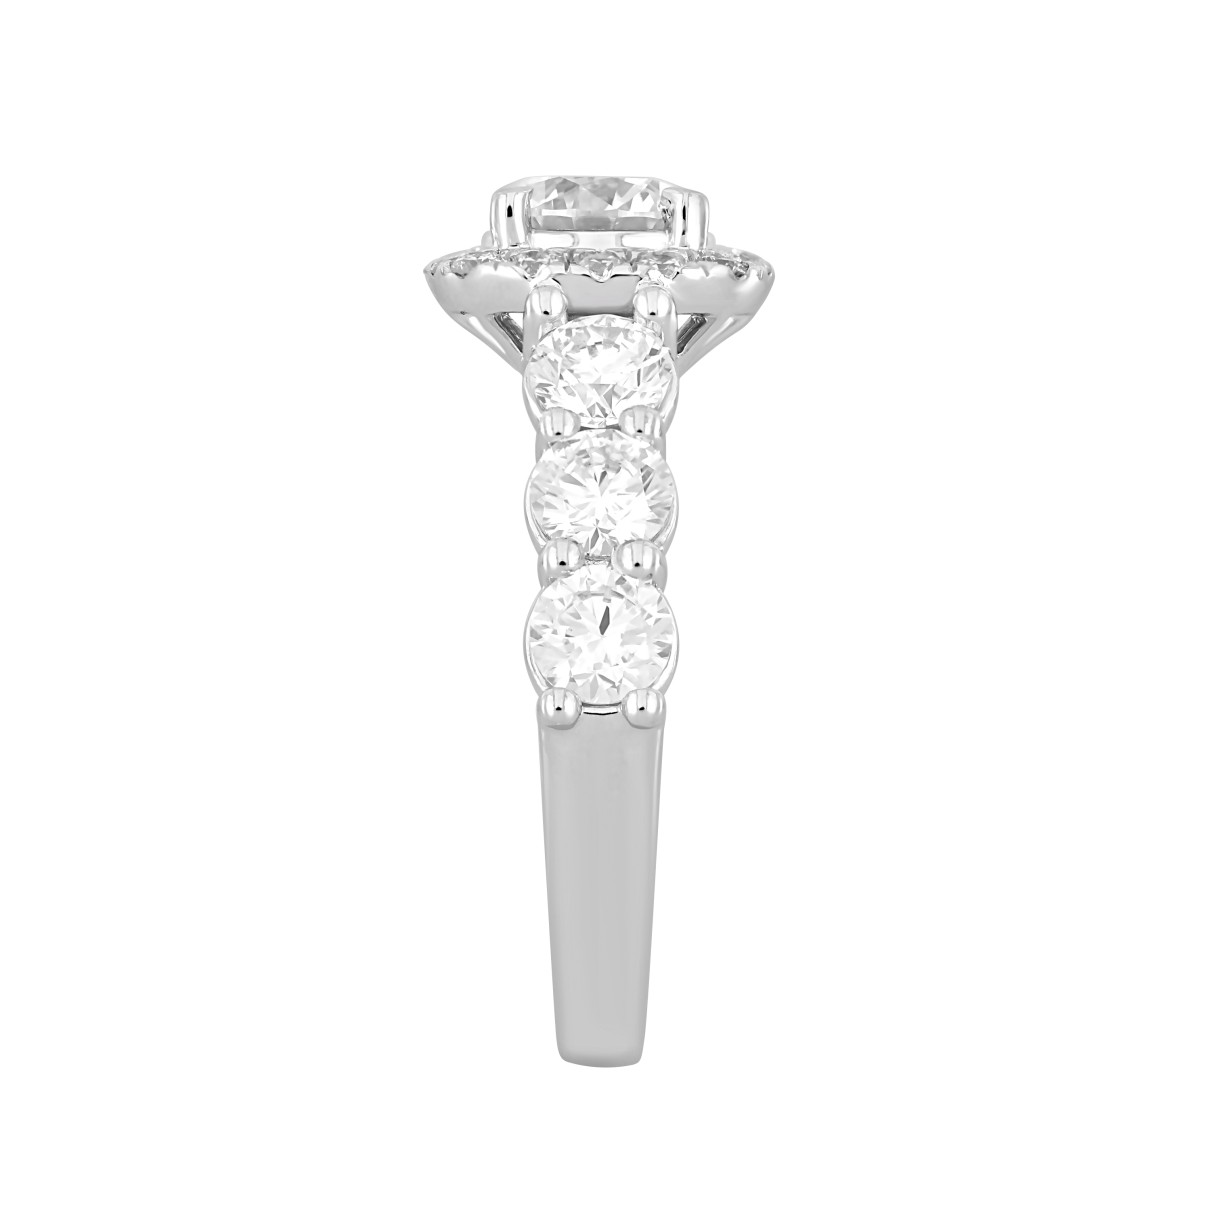 LADIES RING 2 3/4CT ROUND DIAMOND 14K WHITE GOLD (CENTER STONE ROUND DIAMOND 1CT )